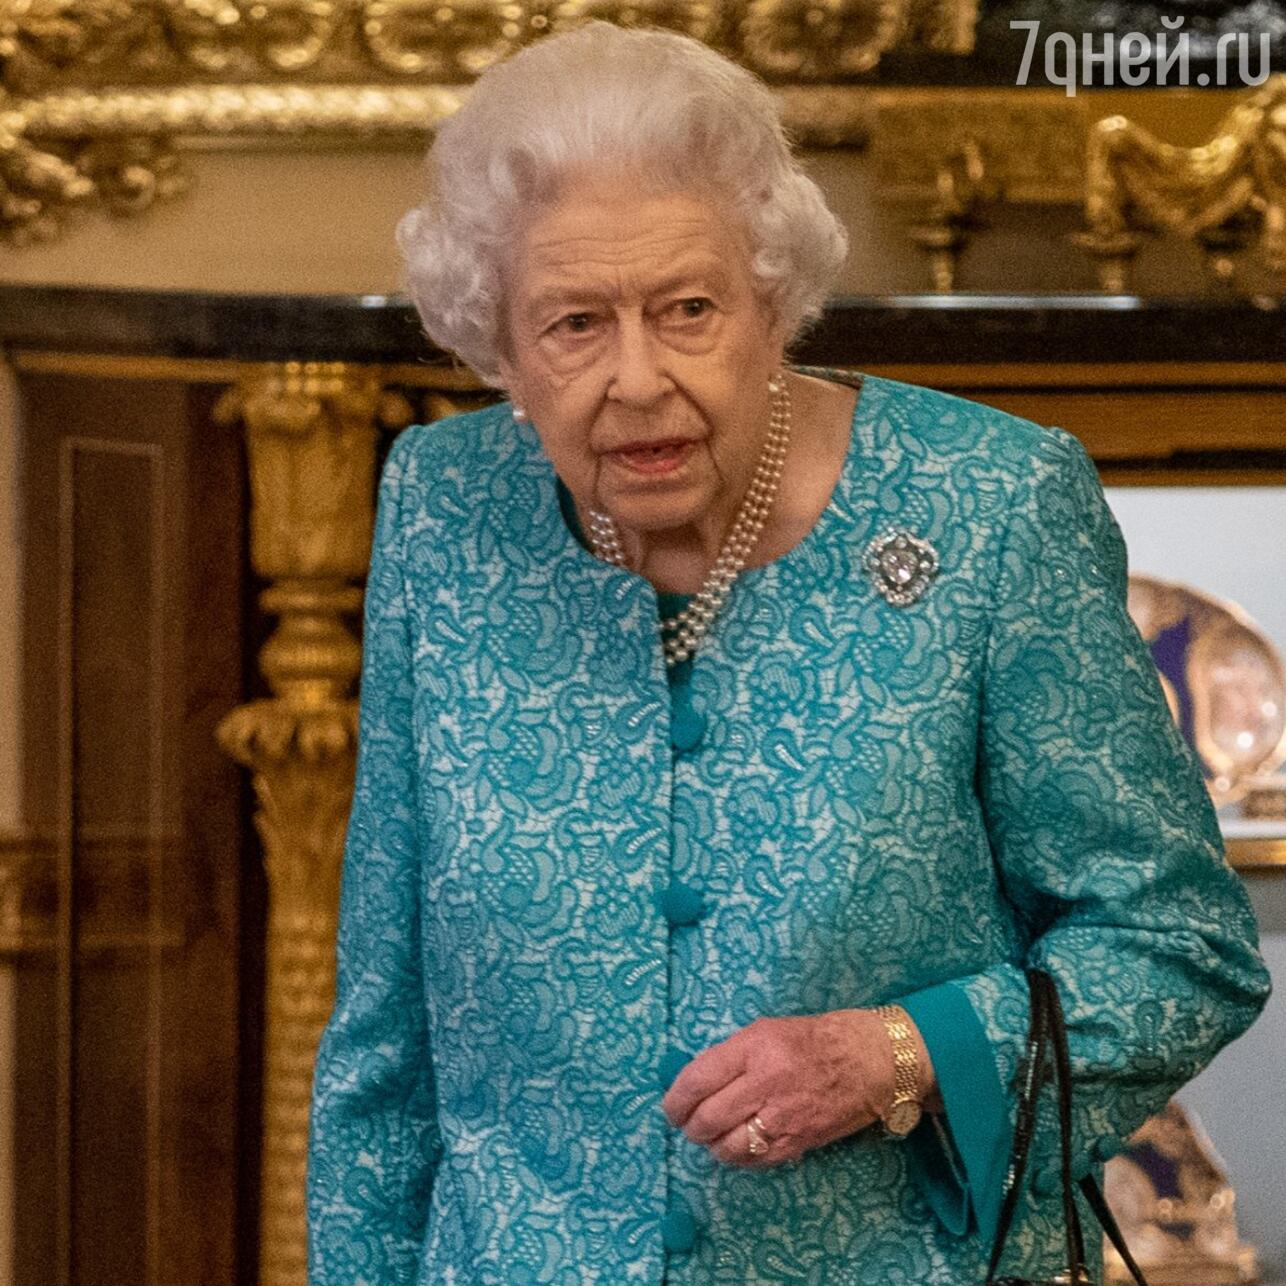 https://www.express.co.uk/news/royal/1524868/queen-news-christening-princess-eugenie-zara-tindall-Prince-harry-meghan-markle-lilibet